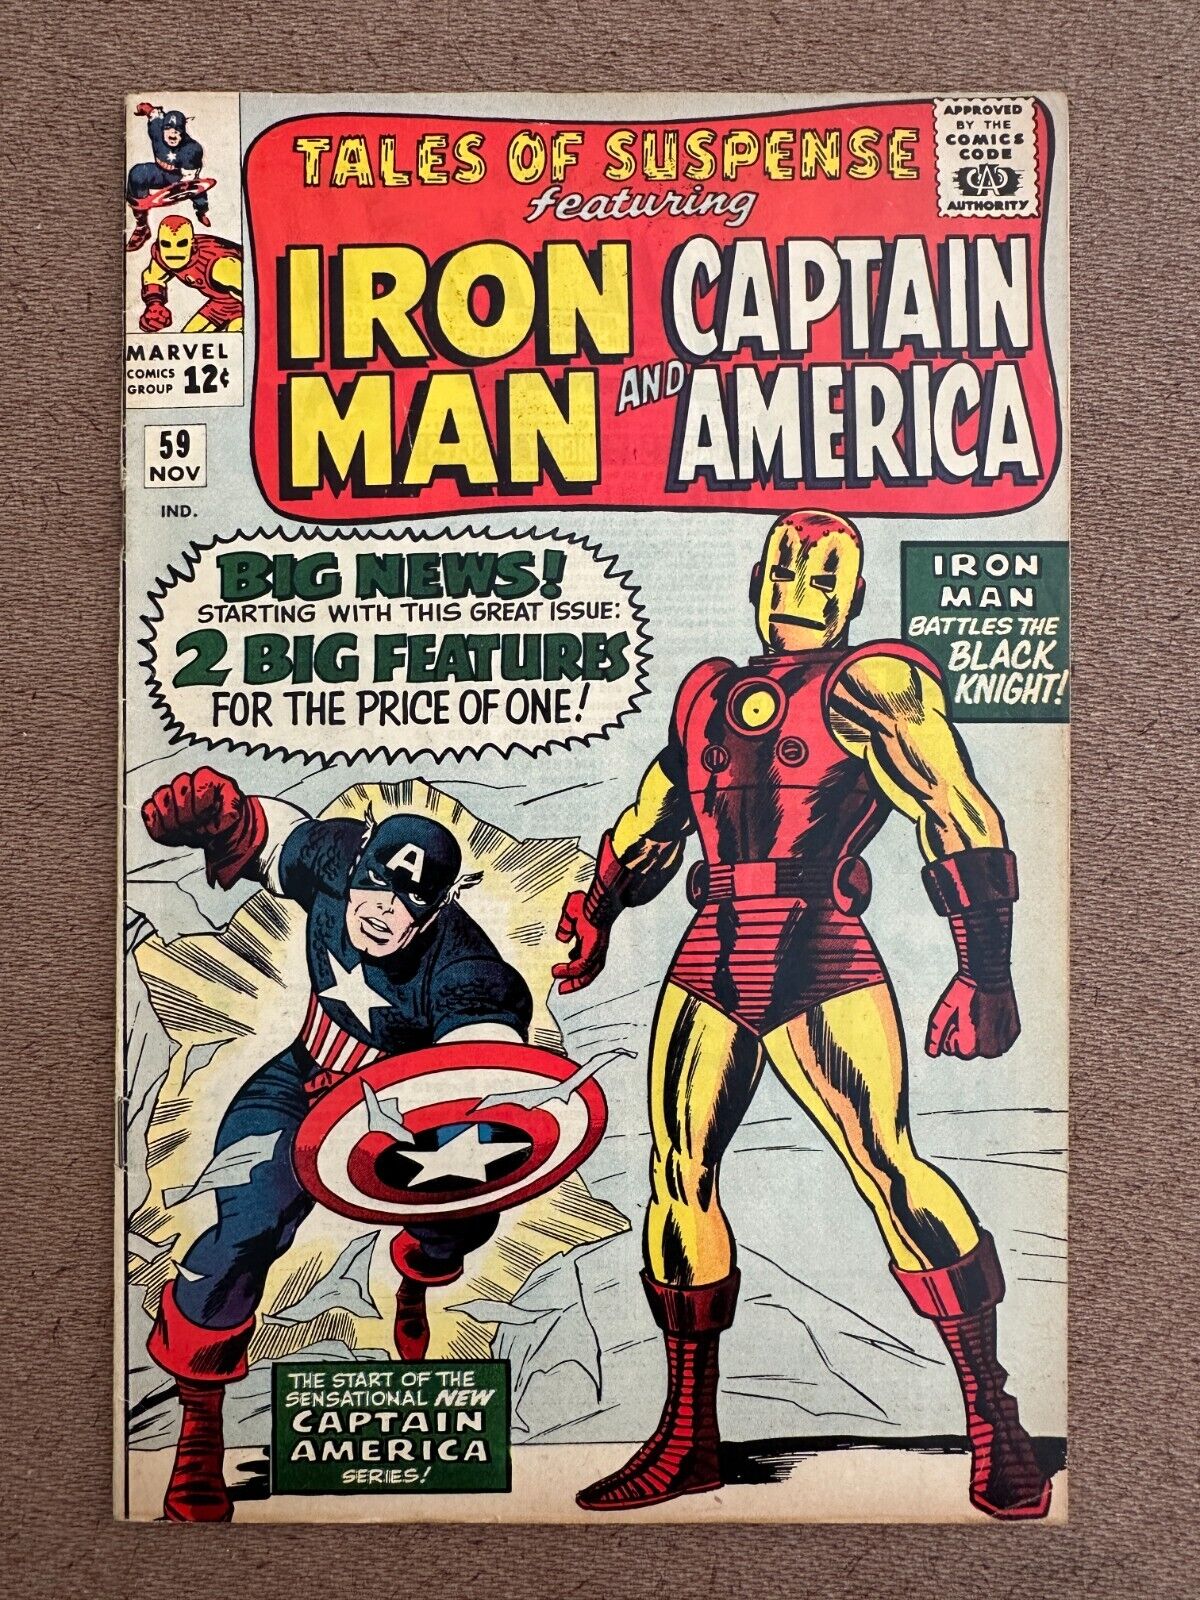 Tales of Suspense #59 1964 Iron Man Key 1st Silver Age Captain America solo tale